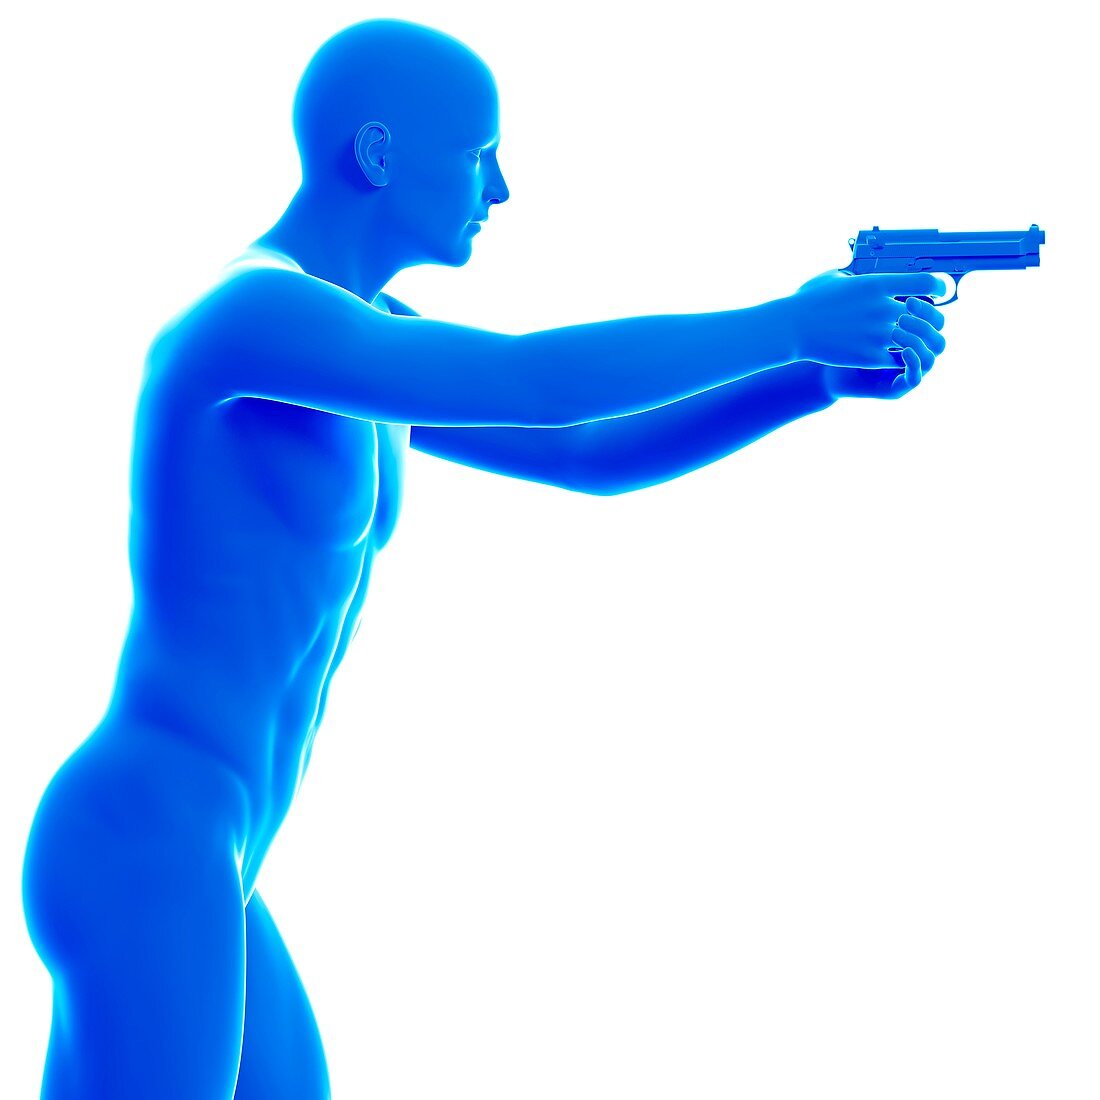 Person holding gun, illustration